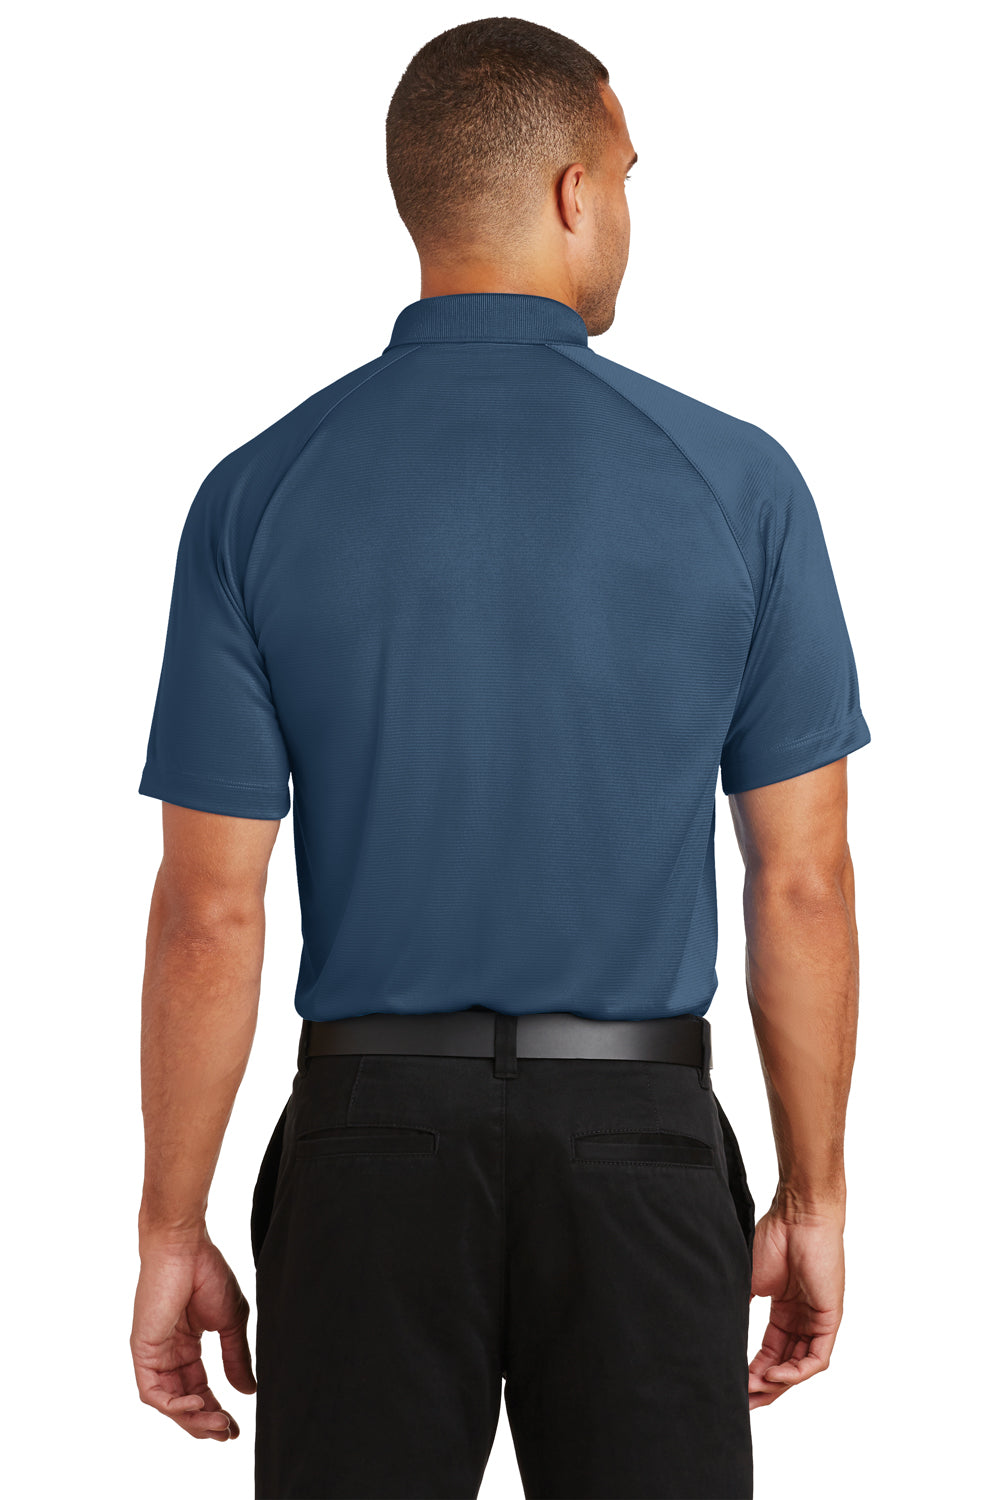 Port Authority K575 Mens Crossover Moisture Wicking Short Sleeve Polo Shirt Regatta Blue Back